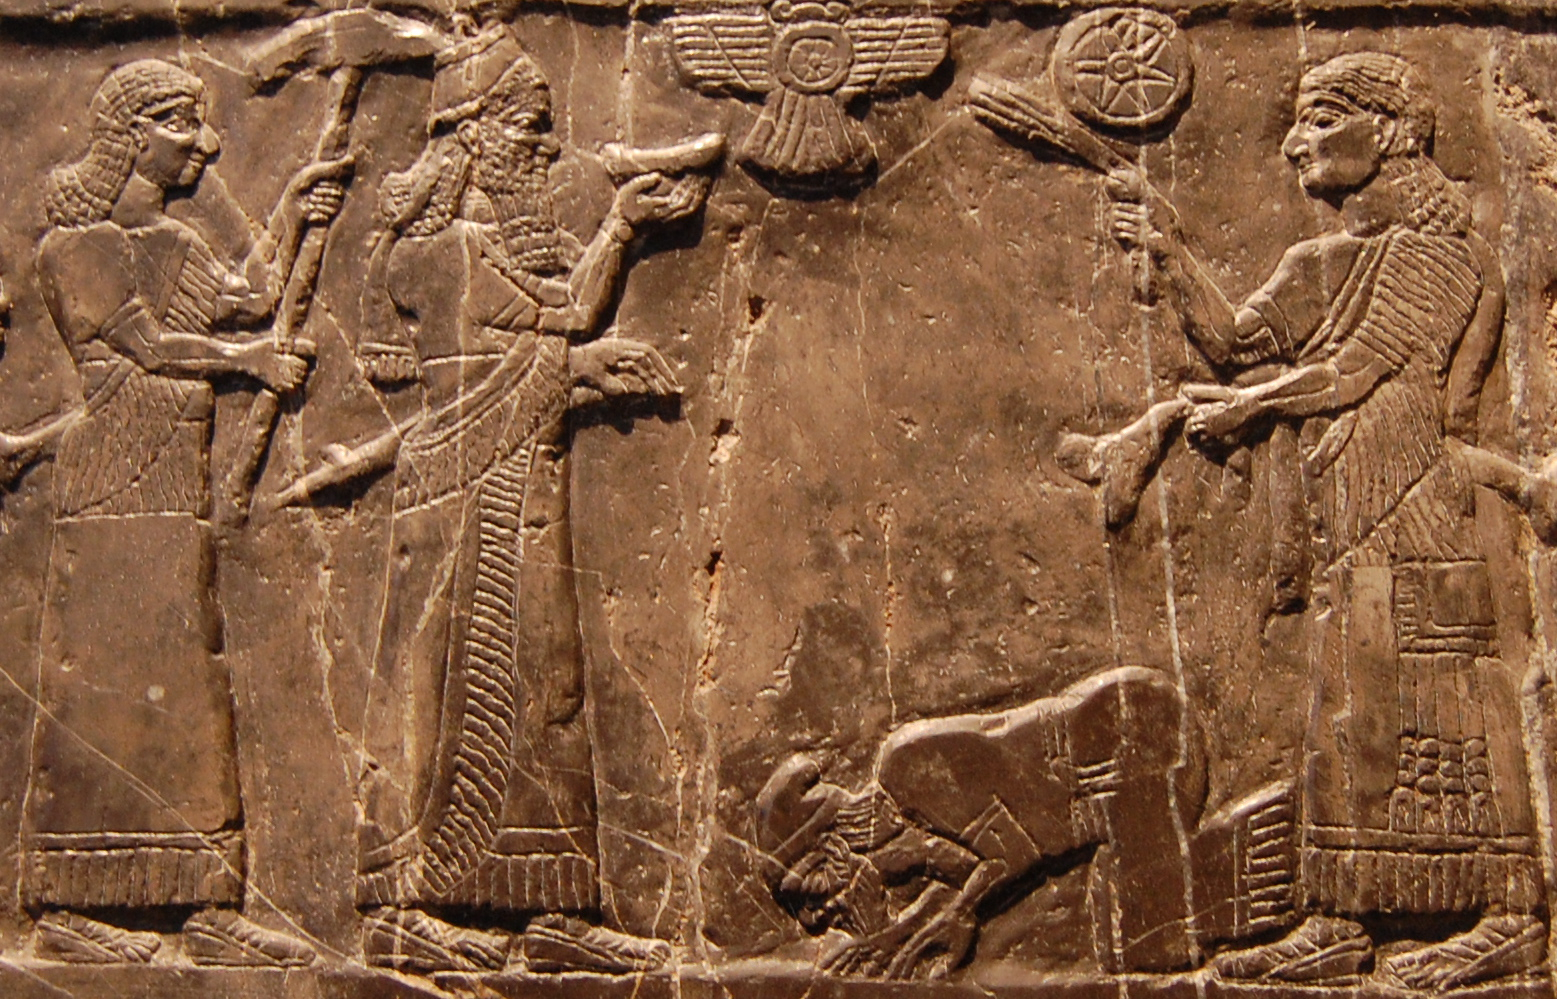 Image of Jehu bowing to Shalmaneser III sometime after Jezreel